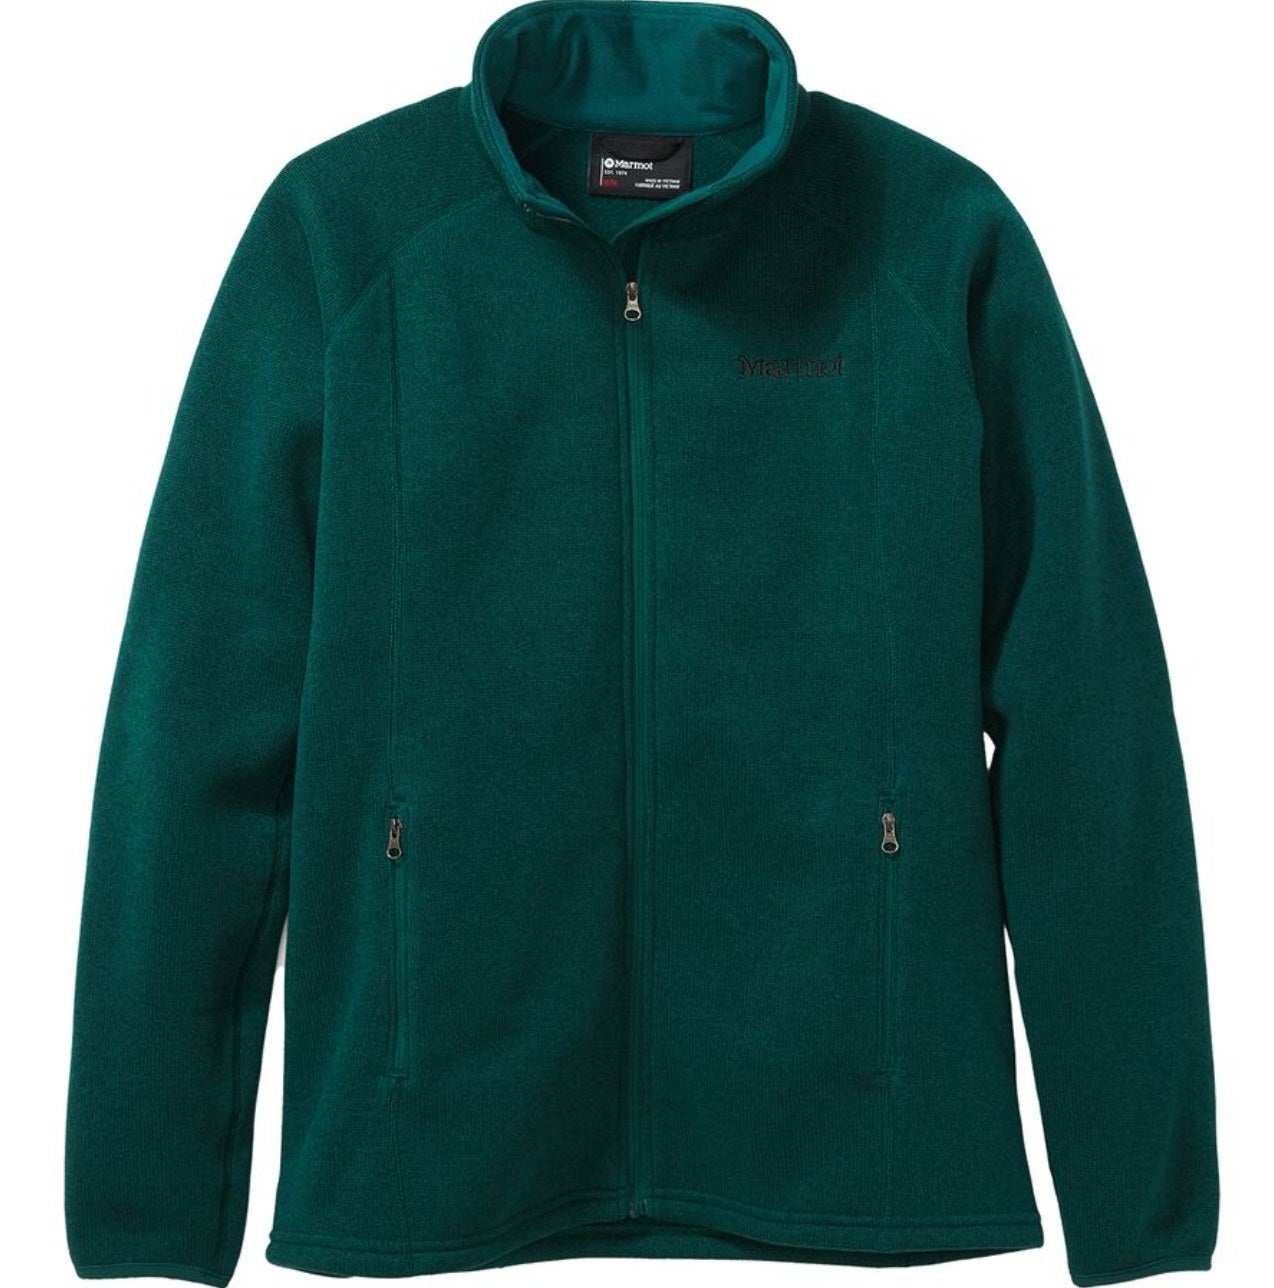 The Marmot fleece jacket in botanical green